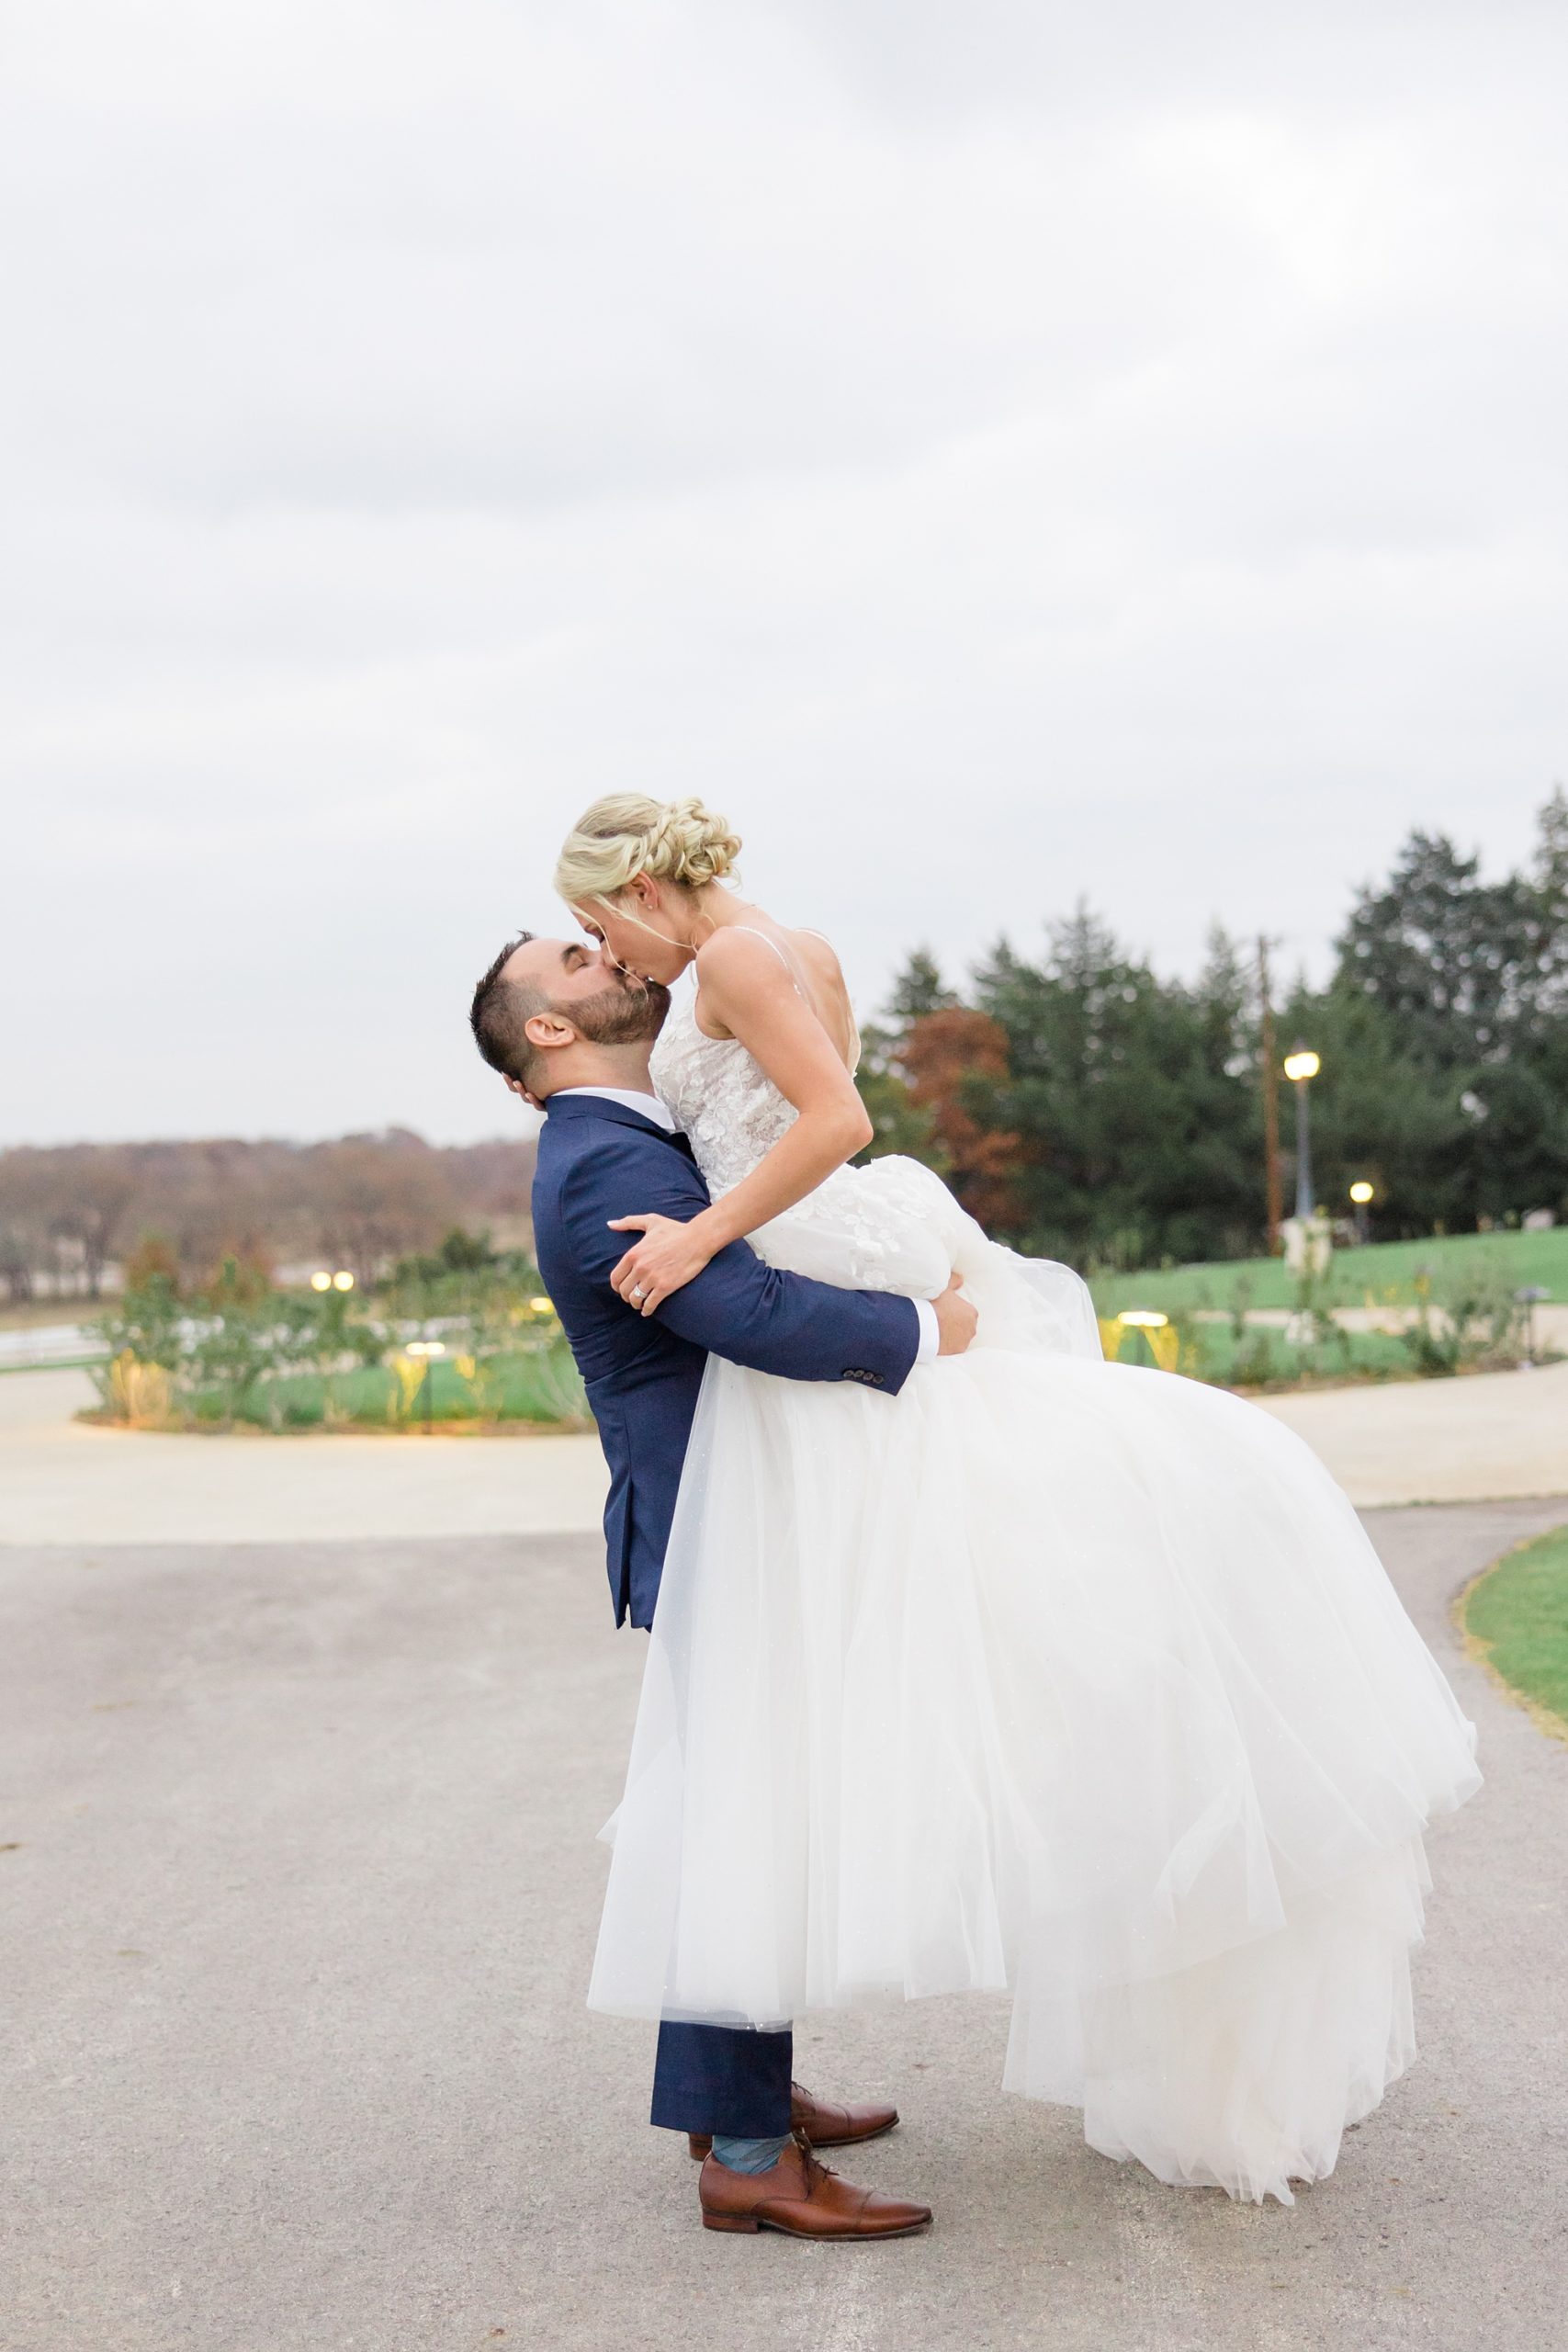 groom lifts bride during wedding photos in Texas